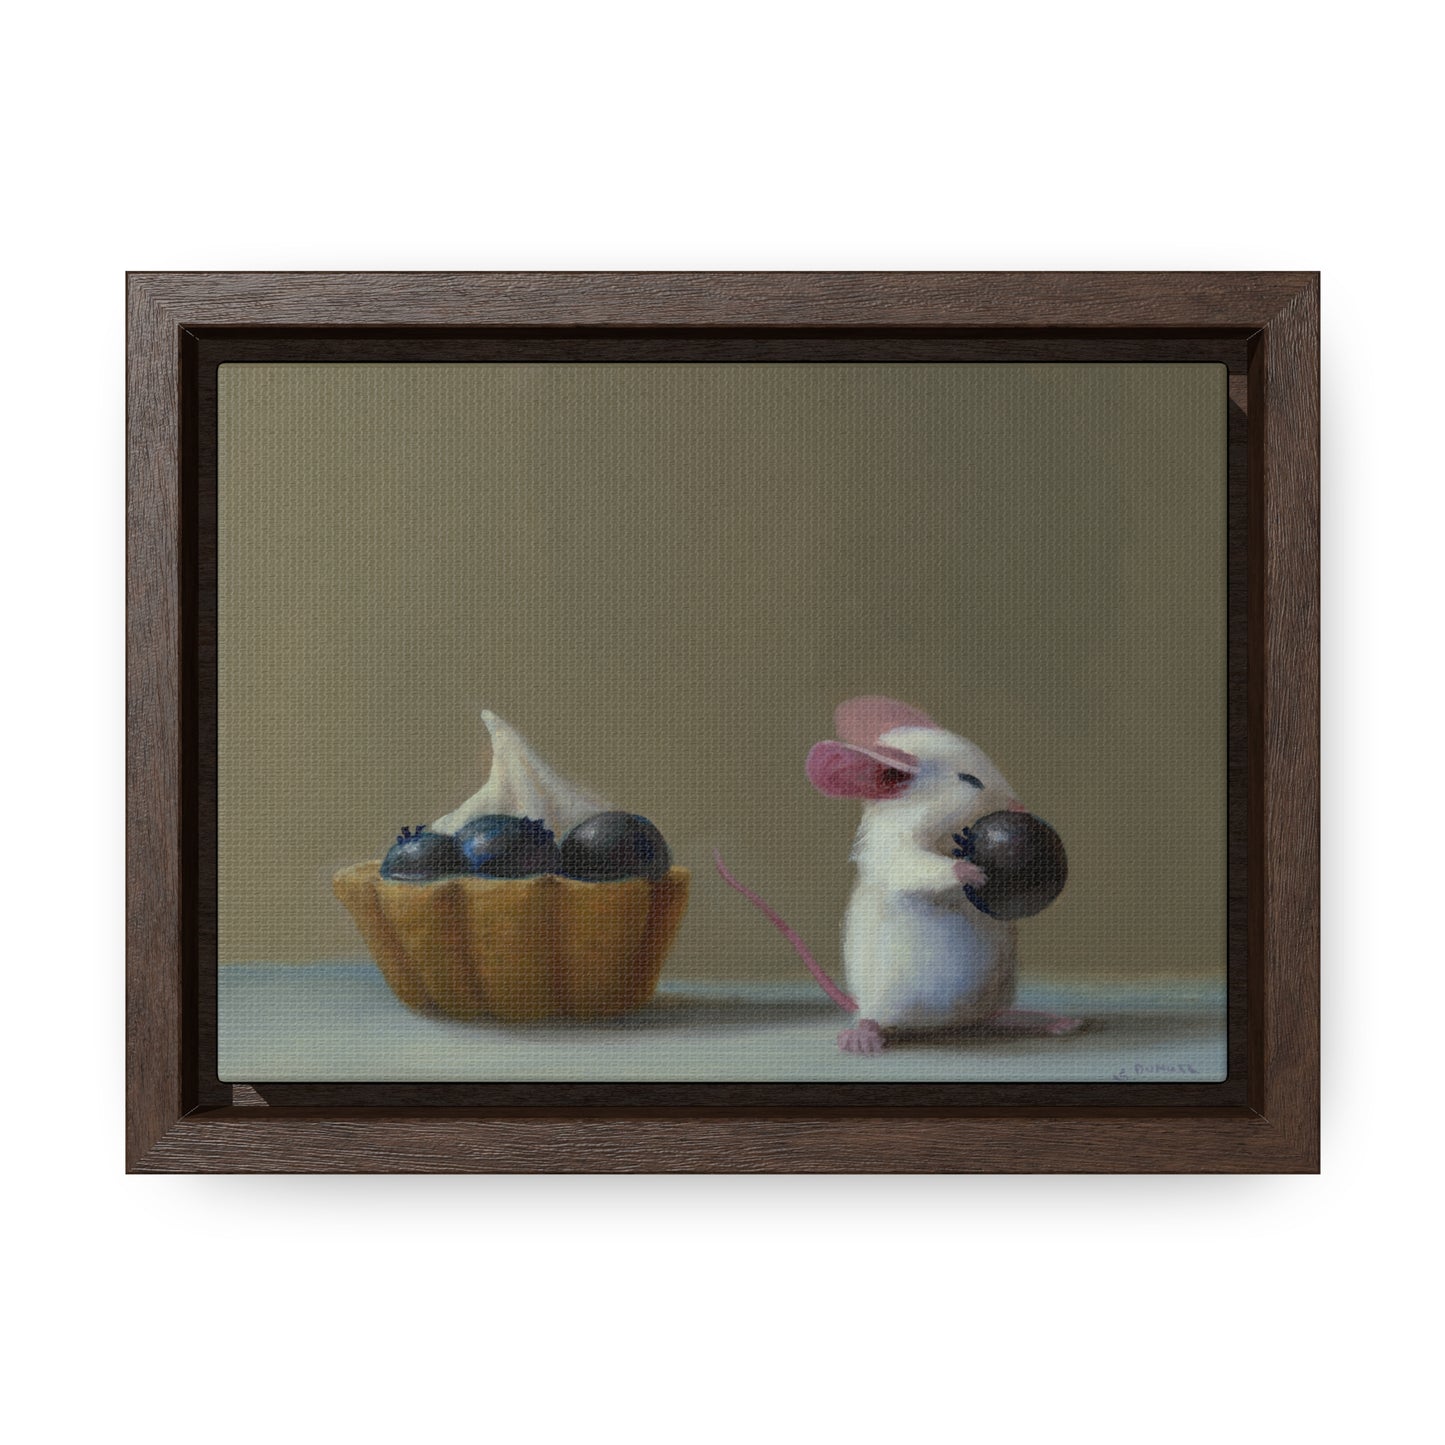 Stuart Dunkel: "Blueberry Tartlet" - Framed Canvas Reproduction